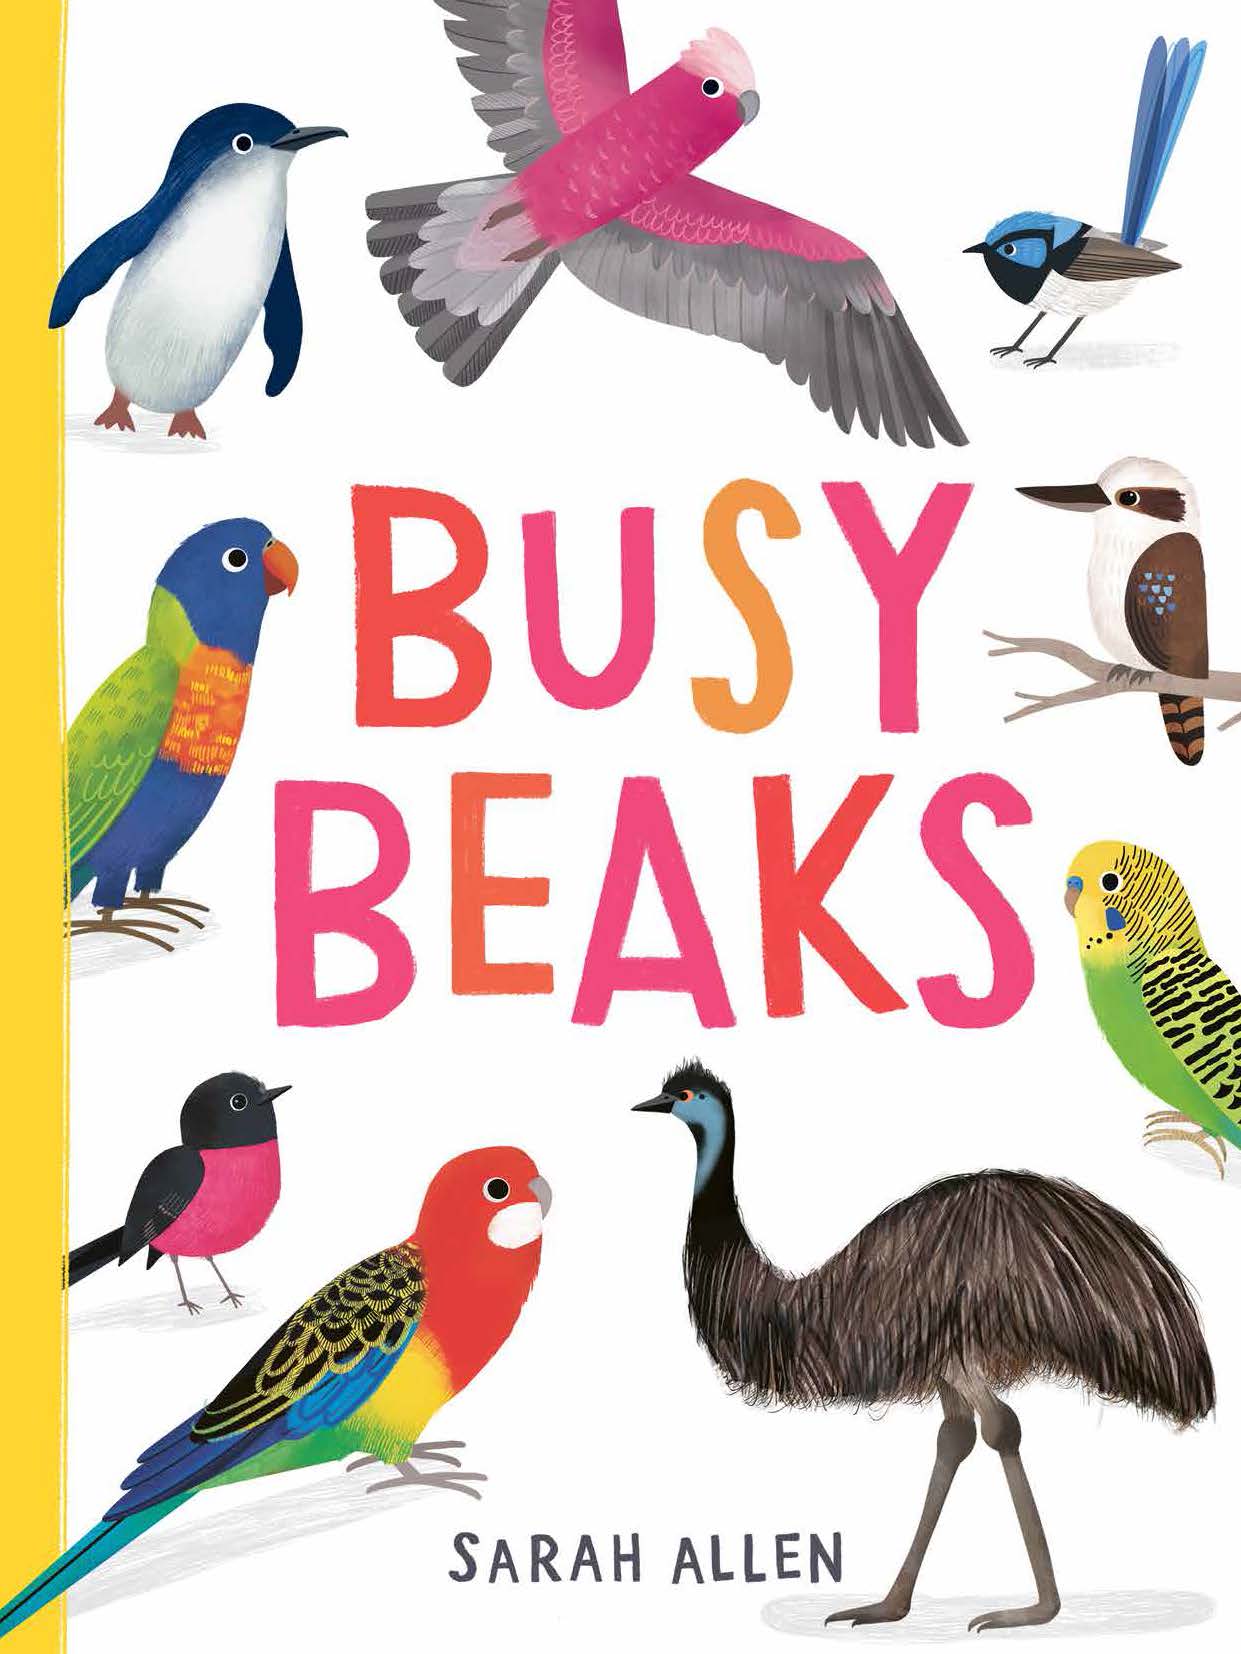 A Range of Australian Birds on the cover of Busy Beaks